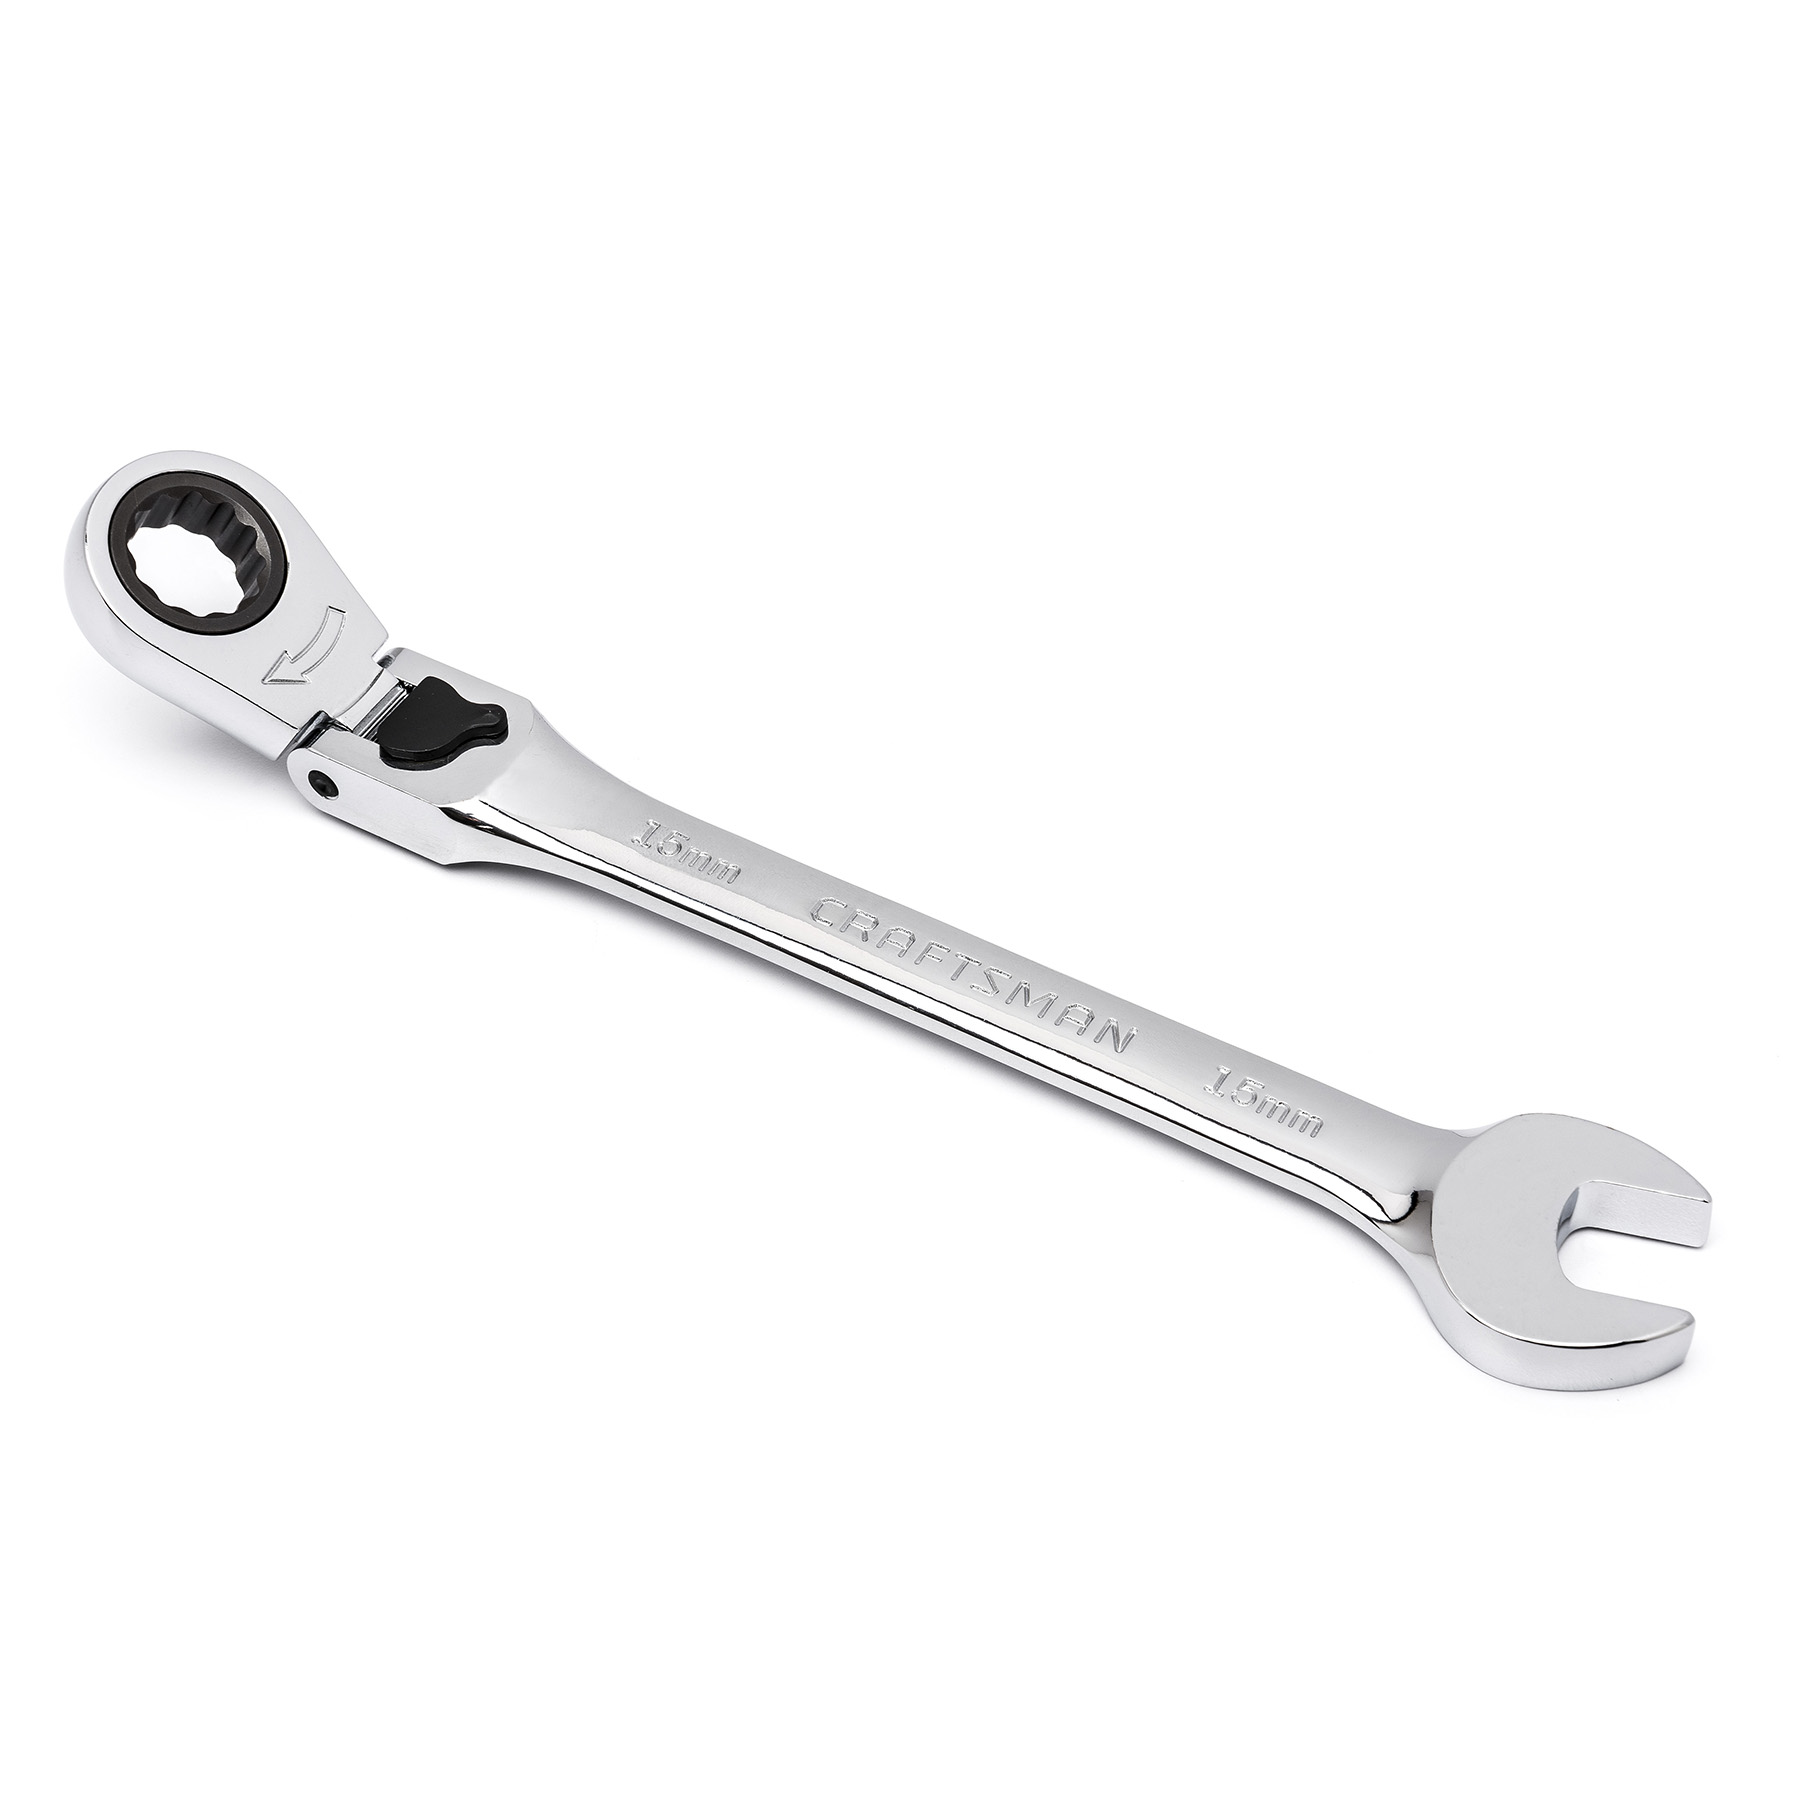 Craftsman 15mm Locking Flex Ratcheting Combination Wrench